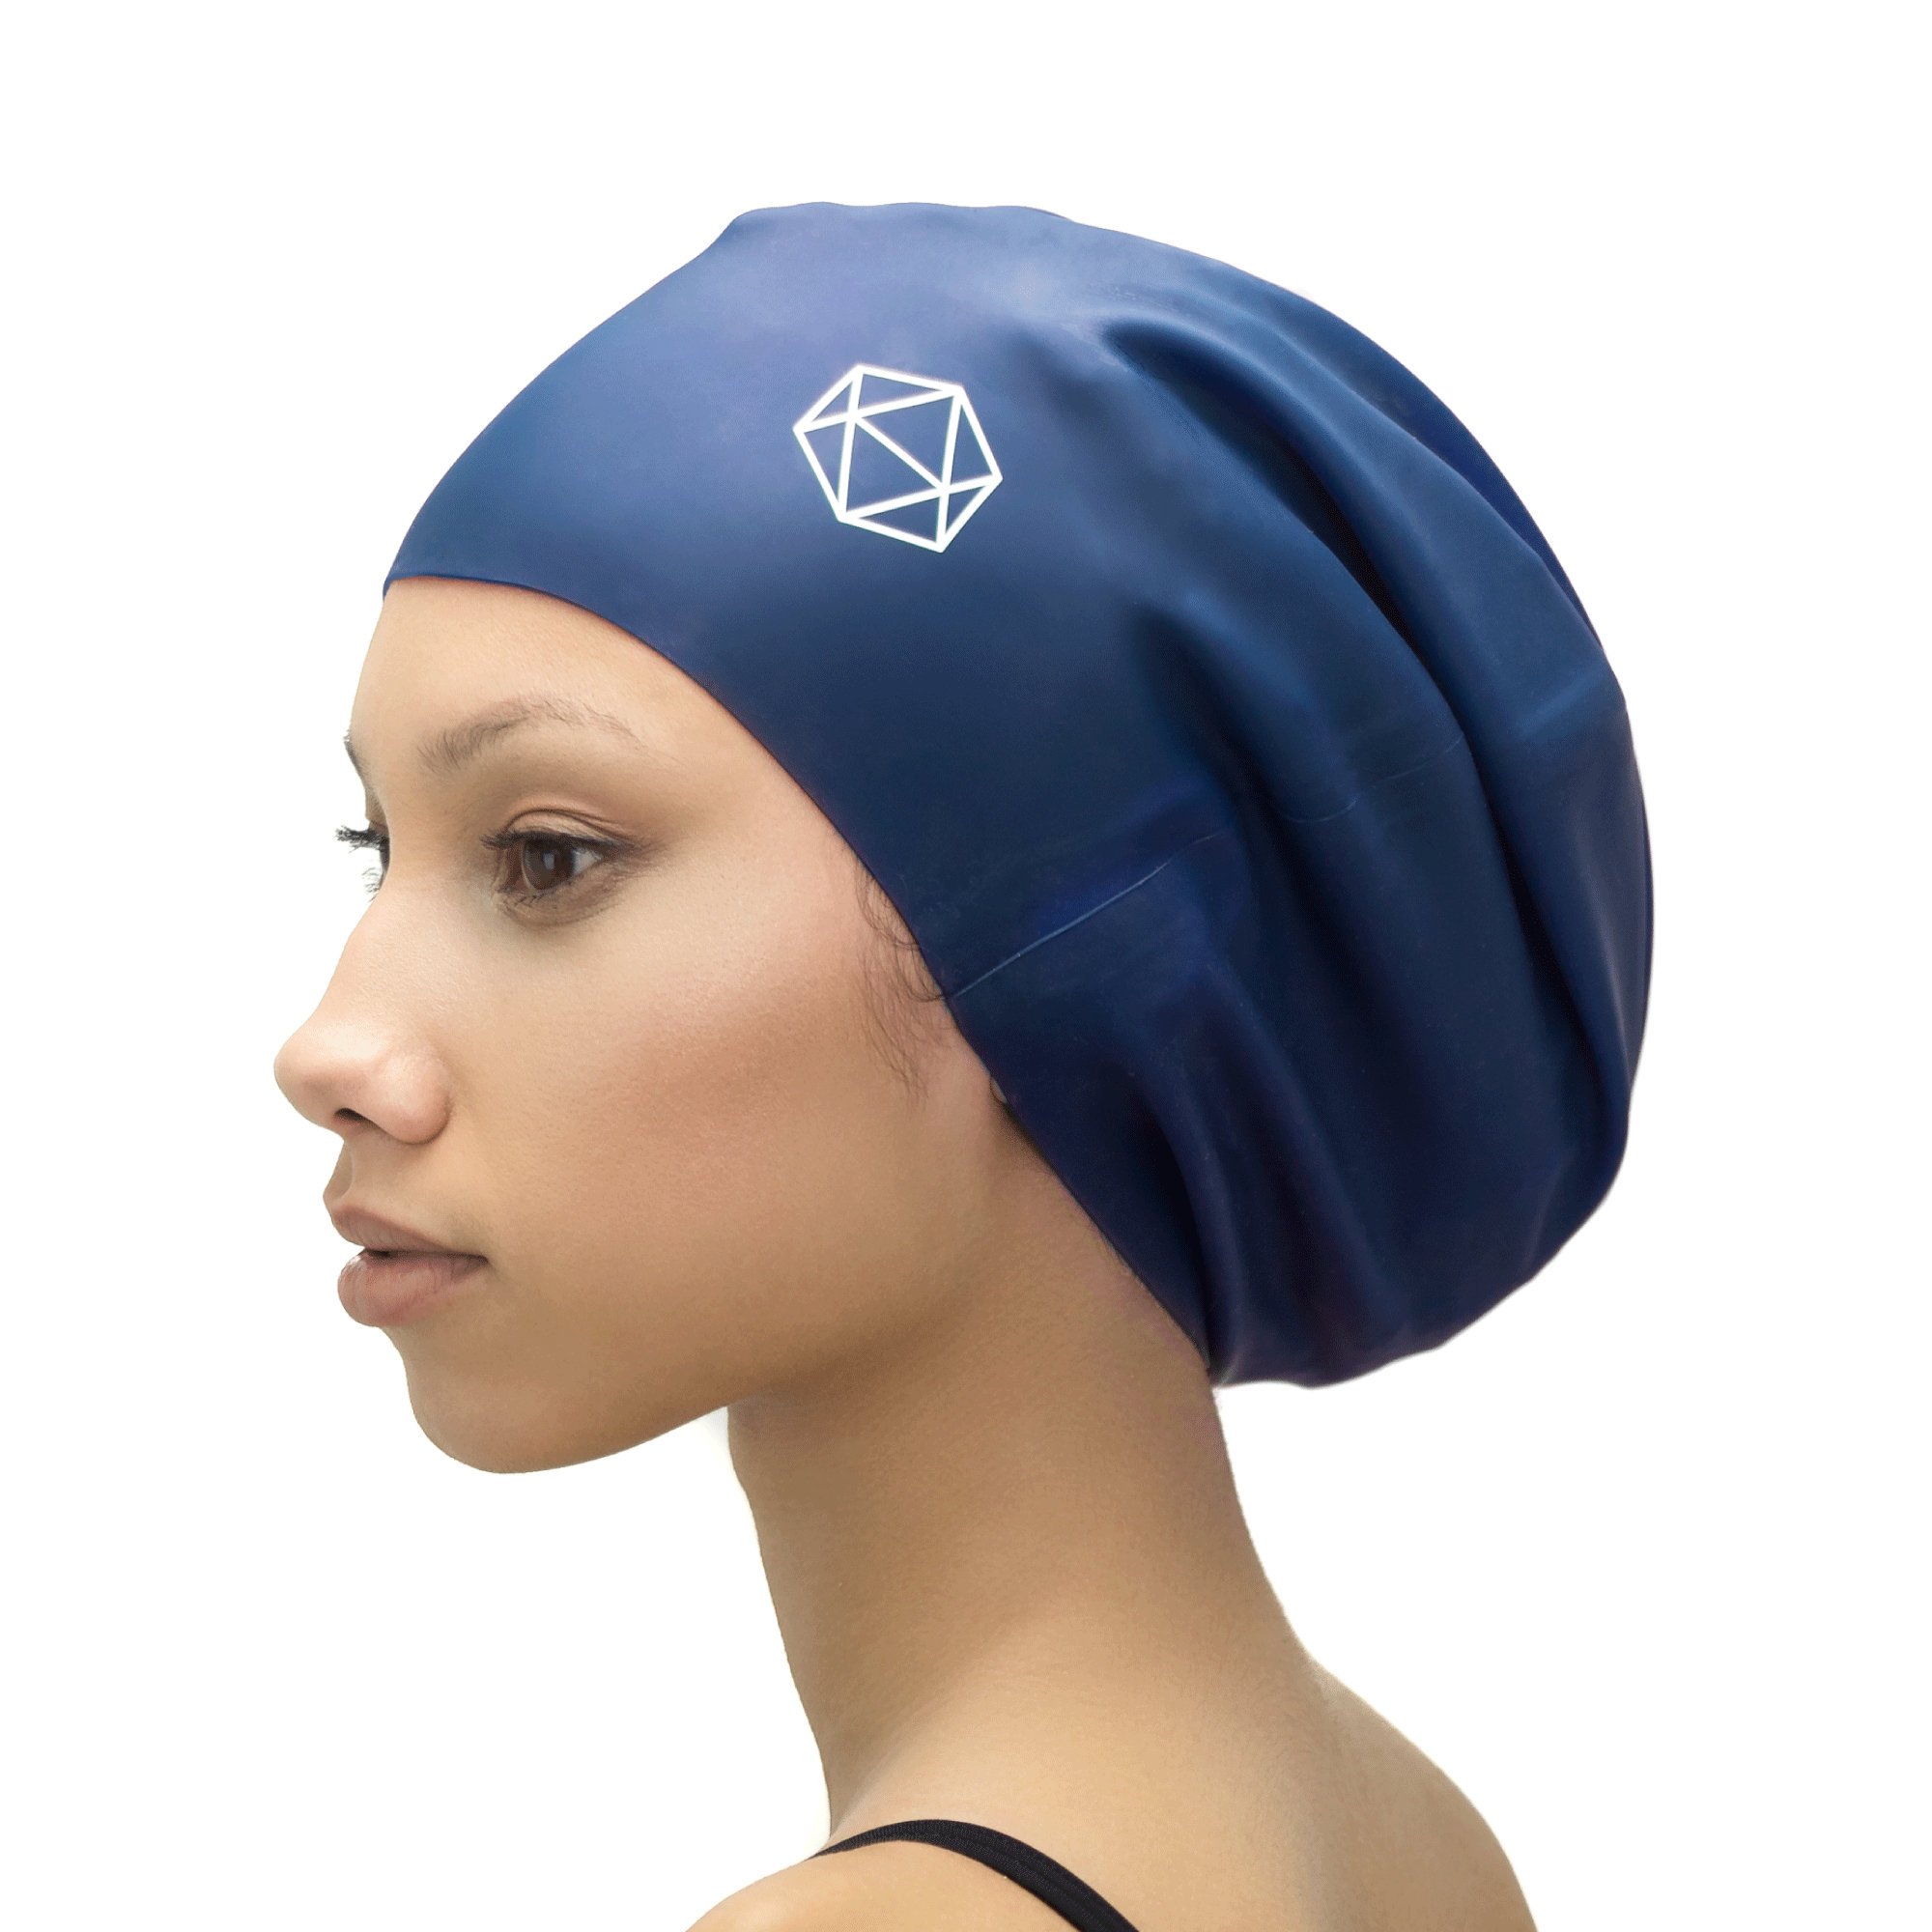 Kupite XL Swim Cap for Locs - kapa za kupanje kapa za kupanje za dreadlocks dreads afros rasta pletenice ekstenzije pletenice